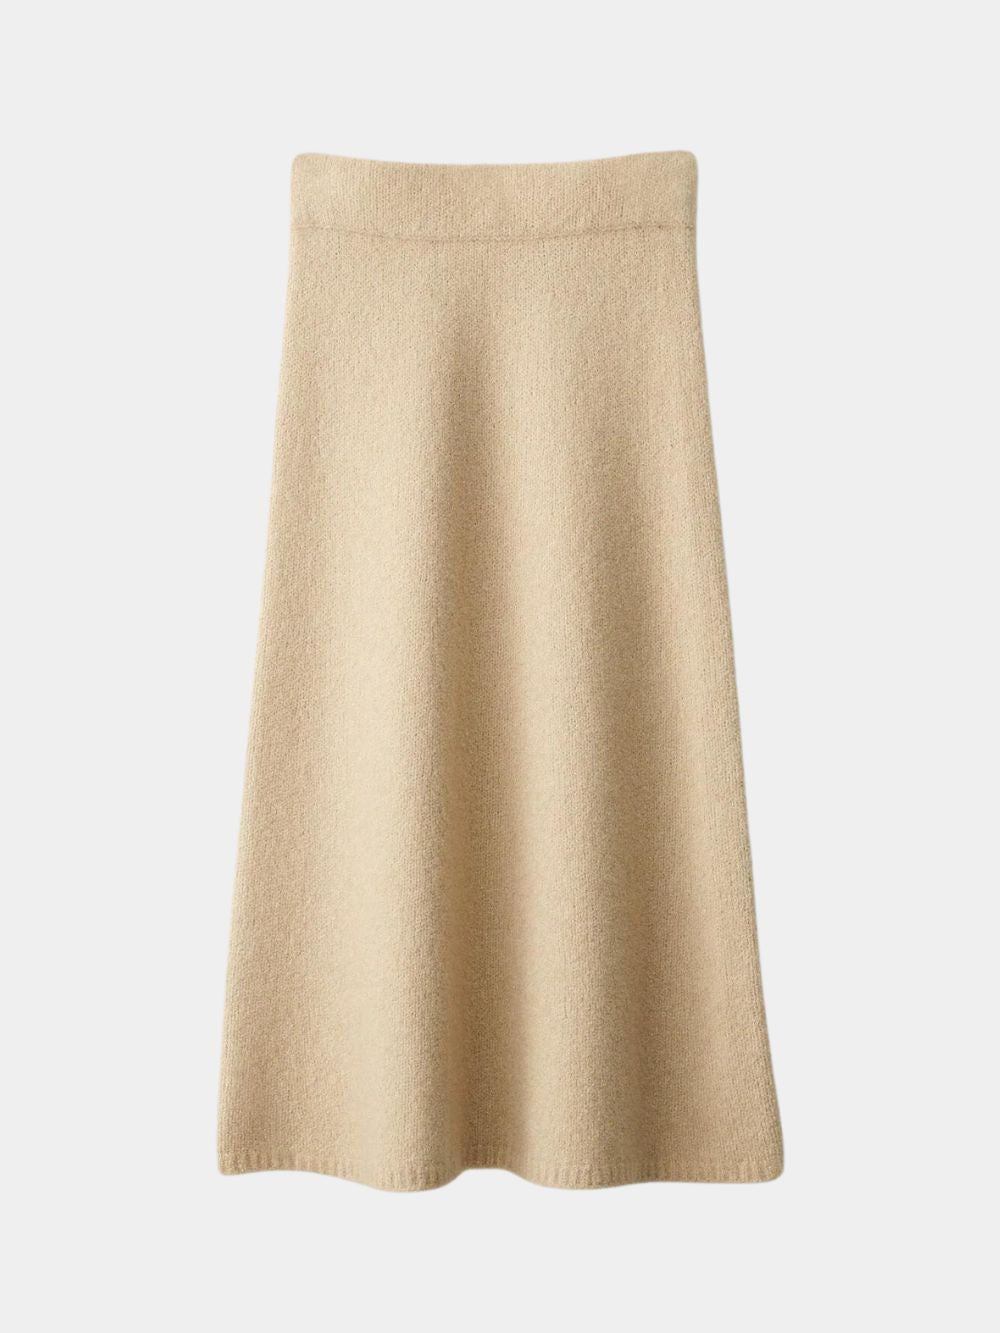 Lisa Yang Kael Skirt in Sand Boucle